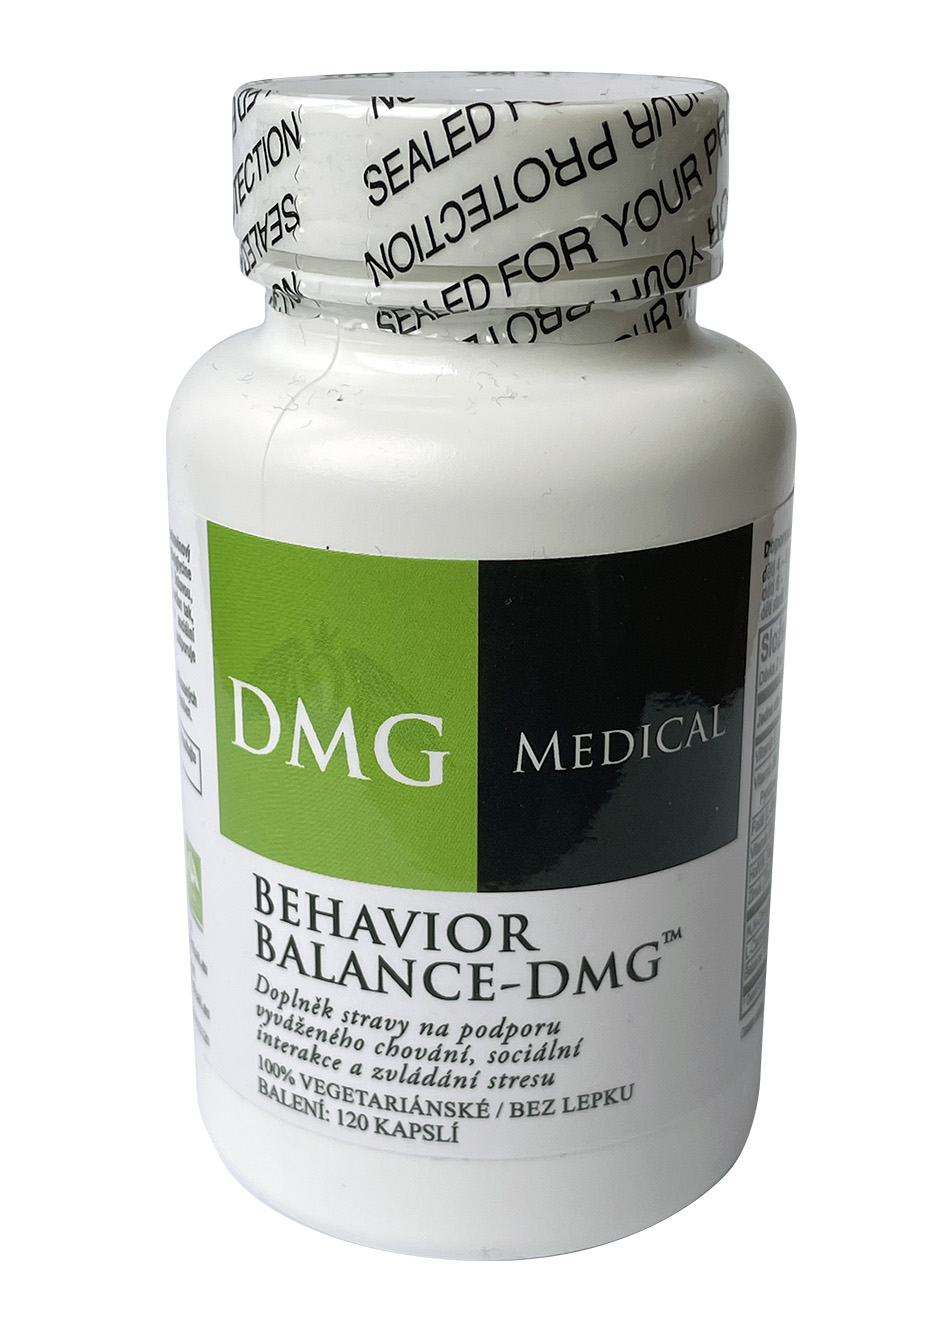 Behavior Balance-DMG, 120 cps